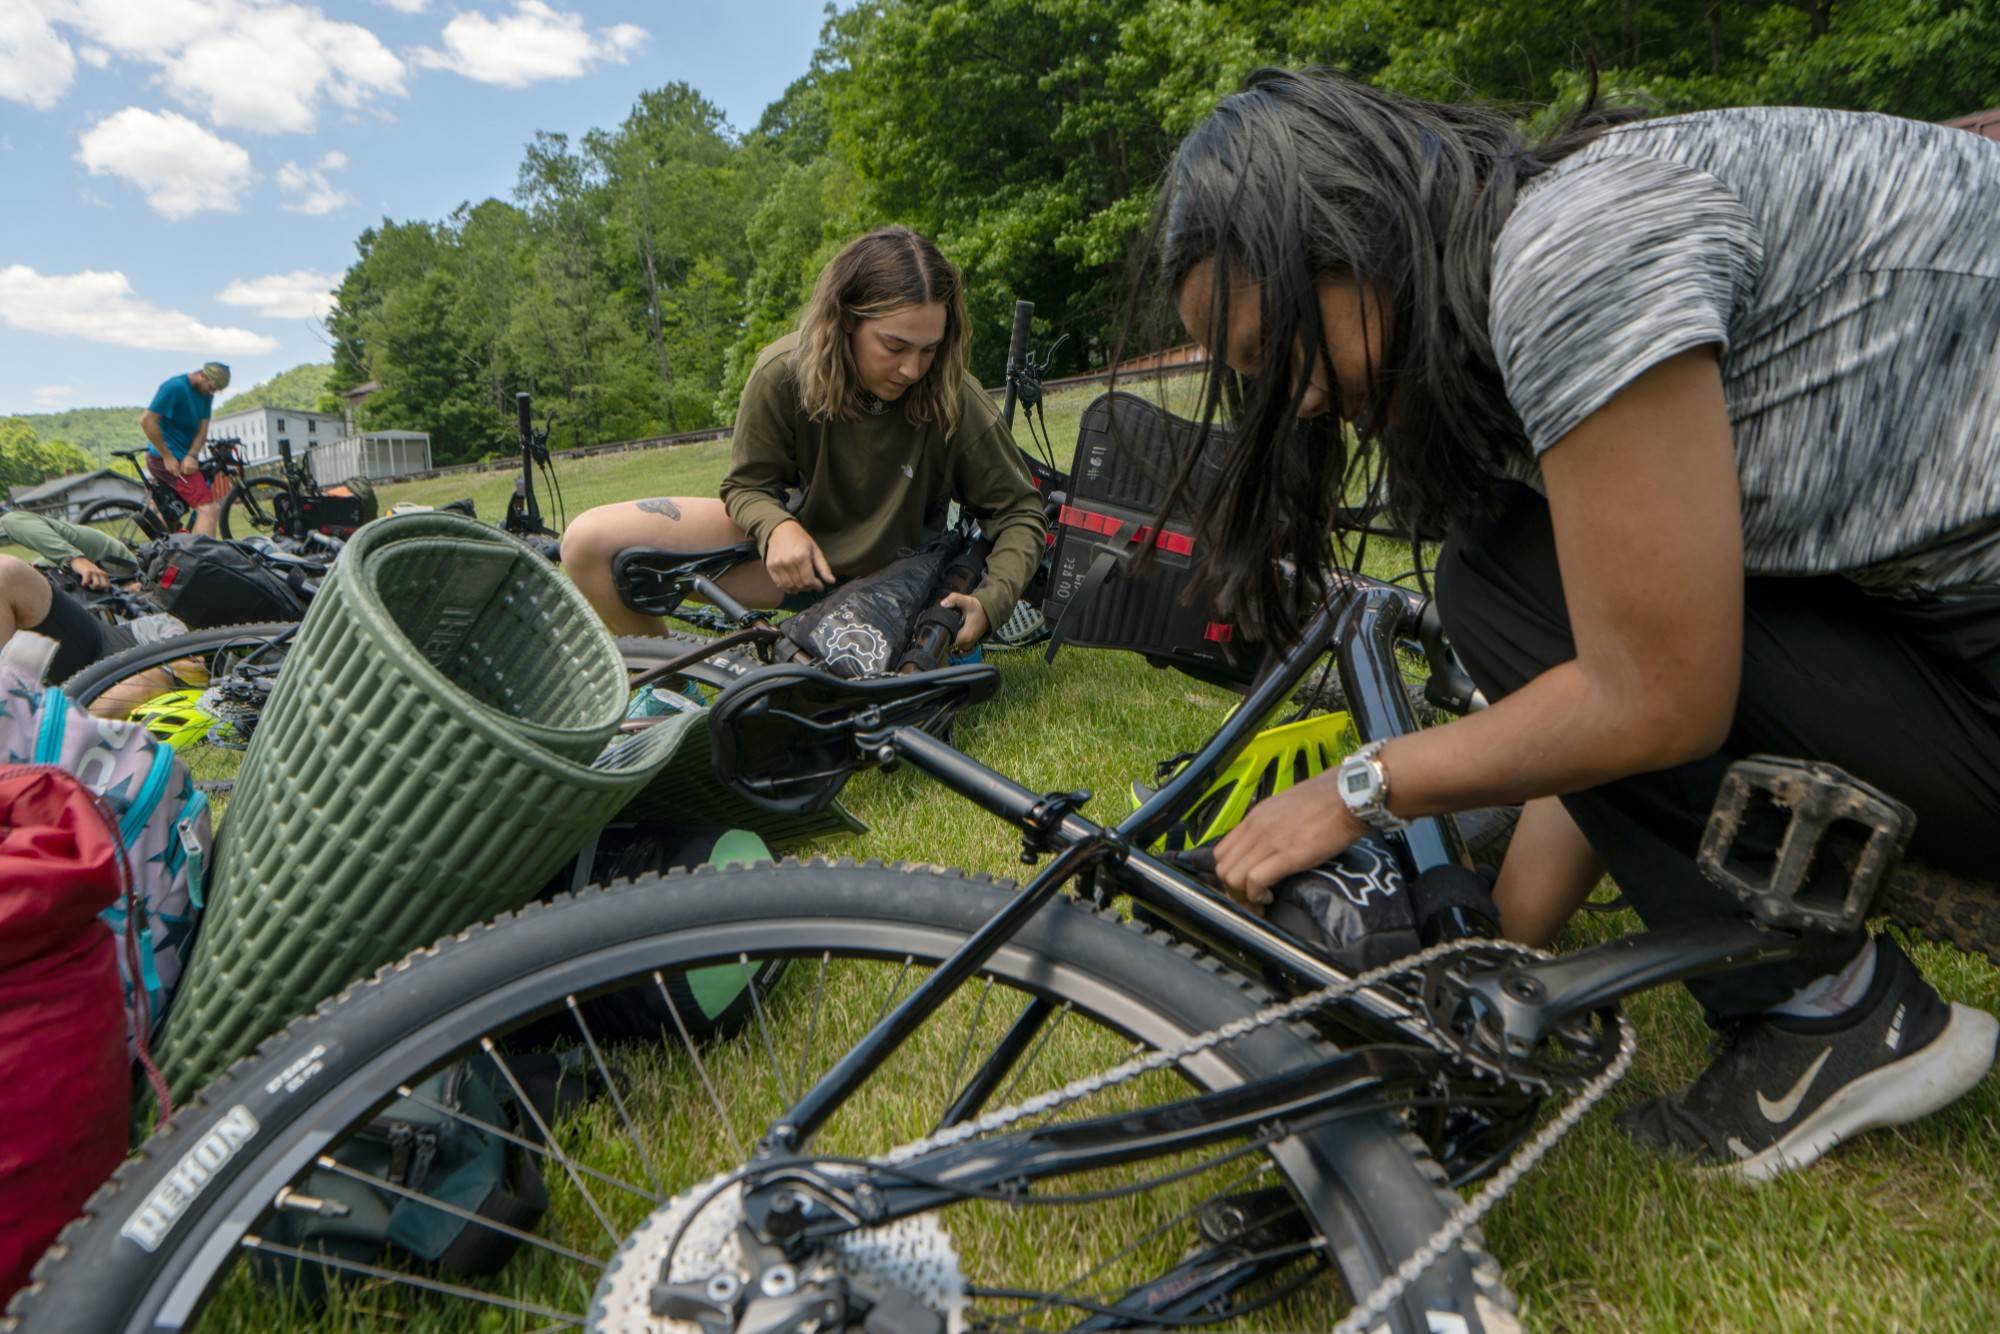 Autumn Warren (left) and Maya Snyder install bike-packing gear on their mountain bikes.